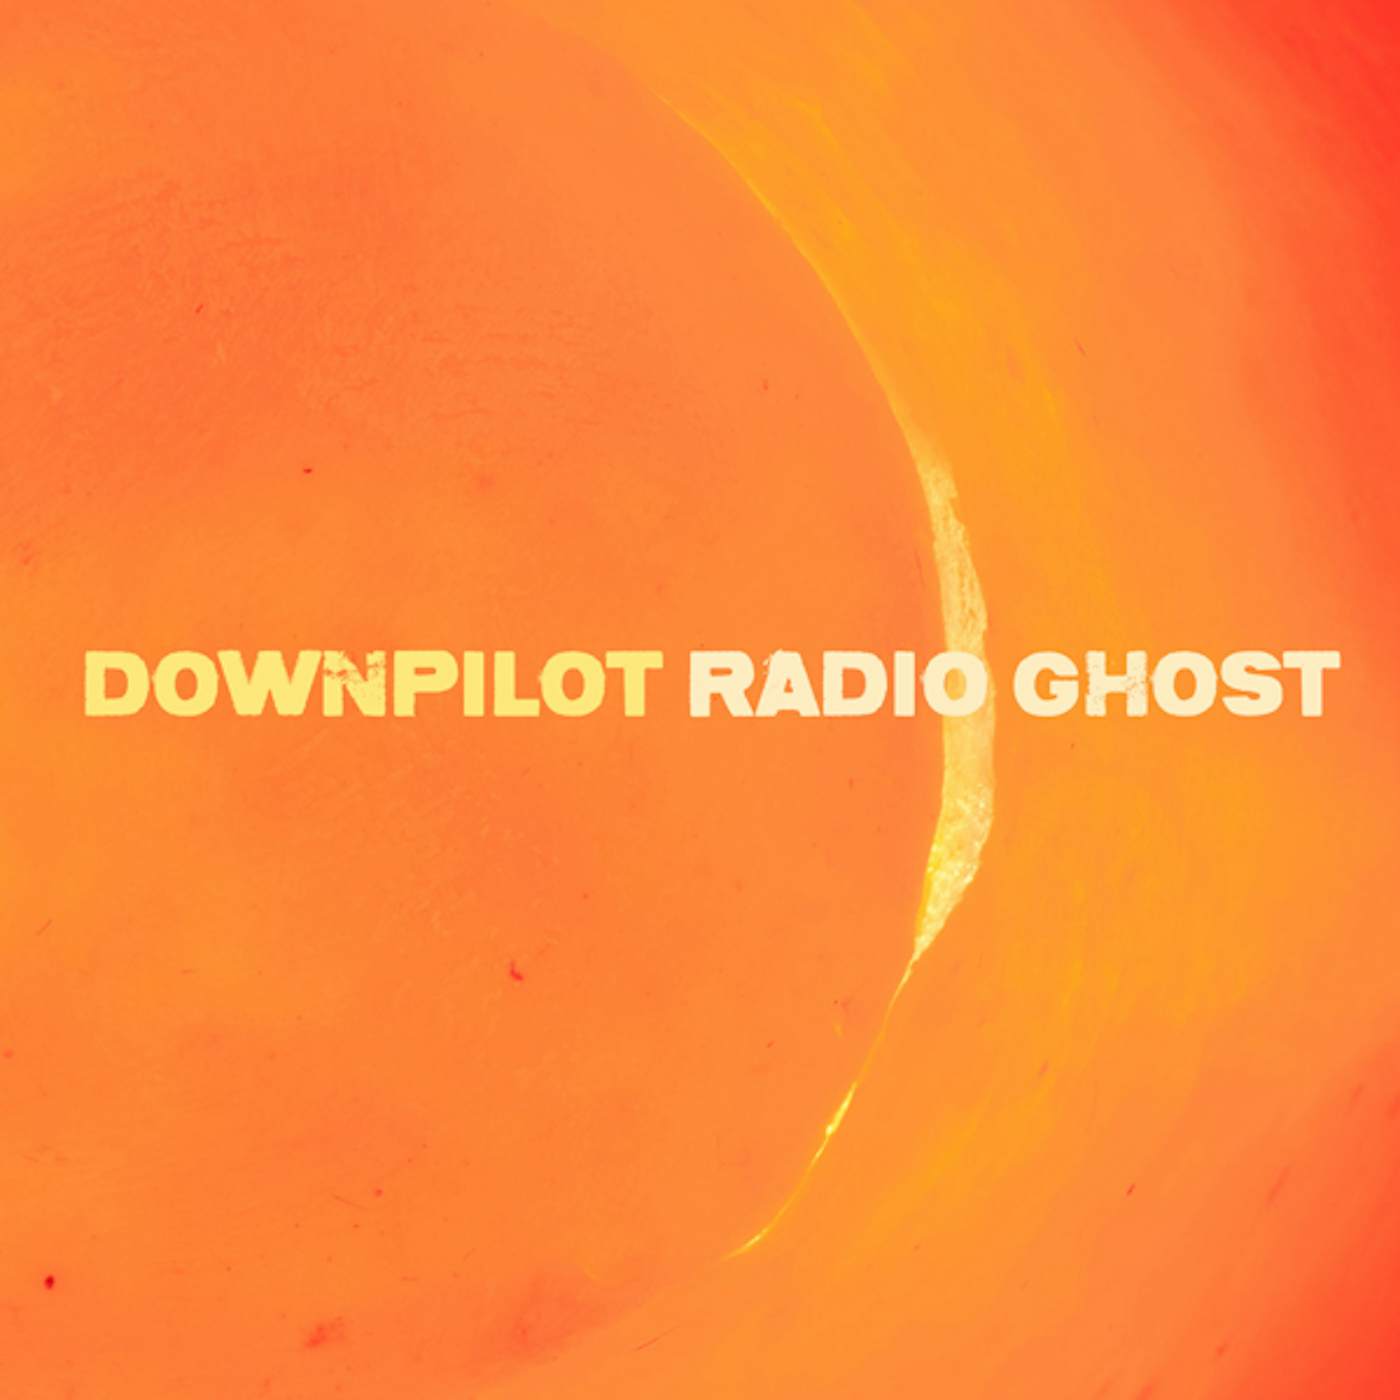 Downpilot Radio Ghost Vinyl Record